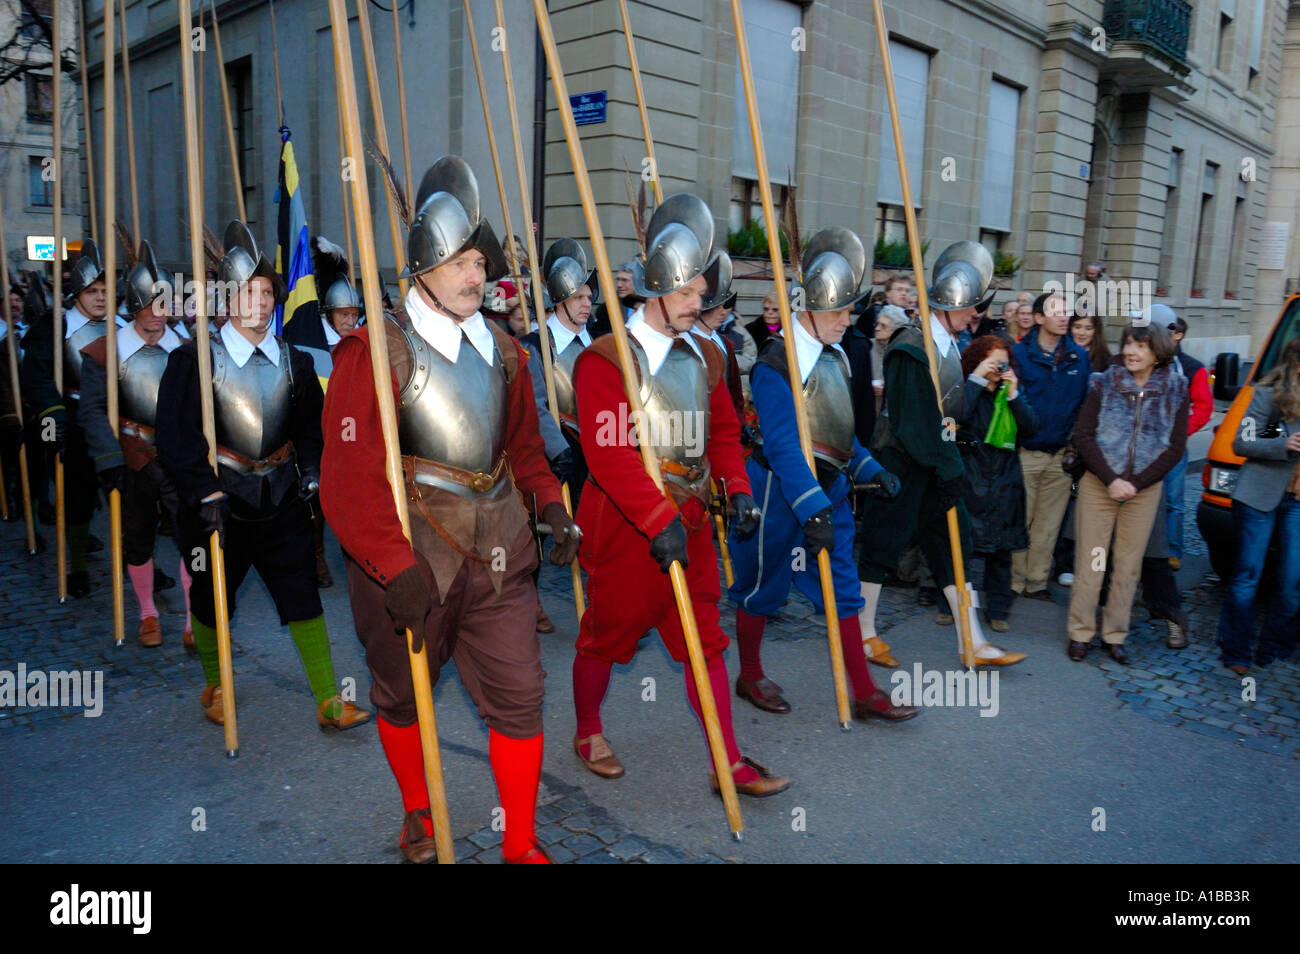 Pikemen marching at the annual Escalade festival in Geneva, Switzerland. Stock Photo